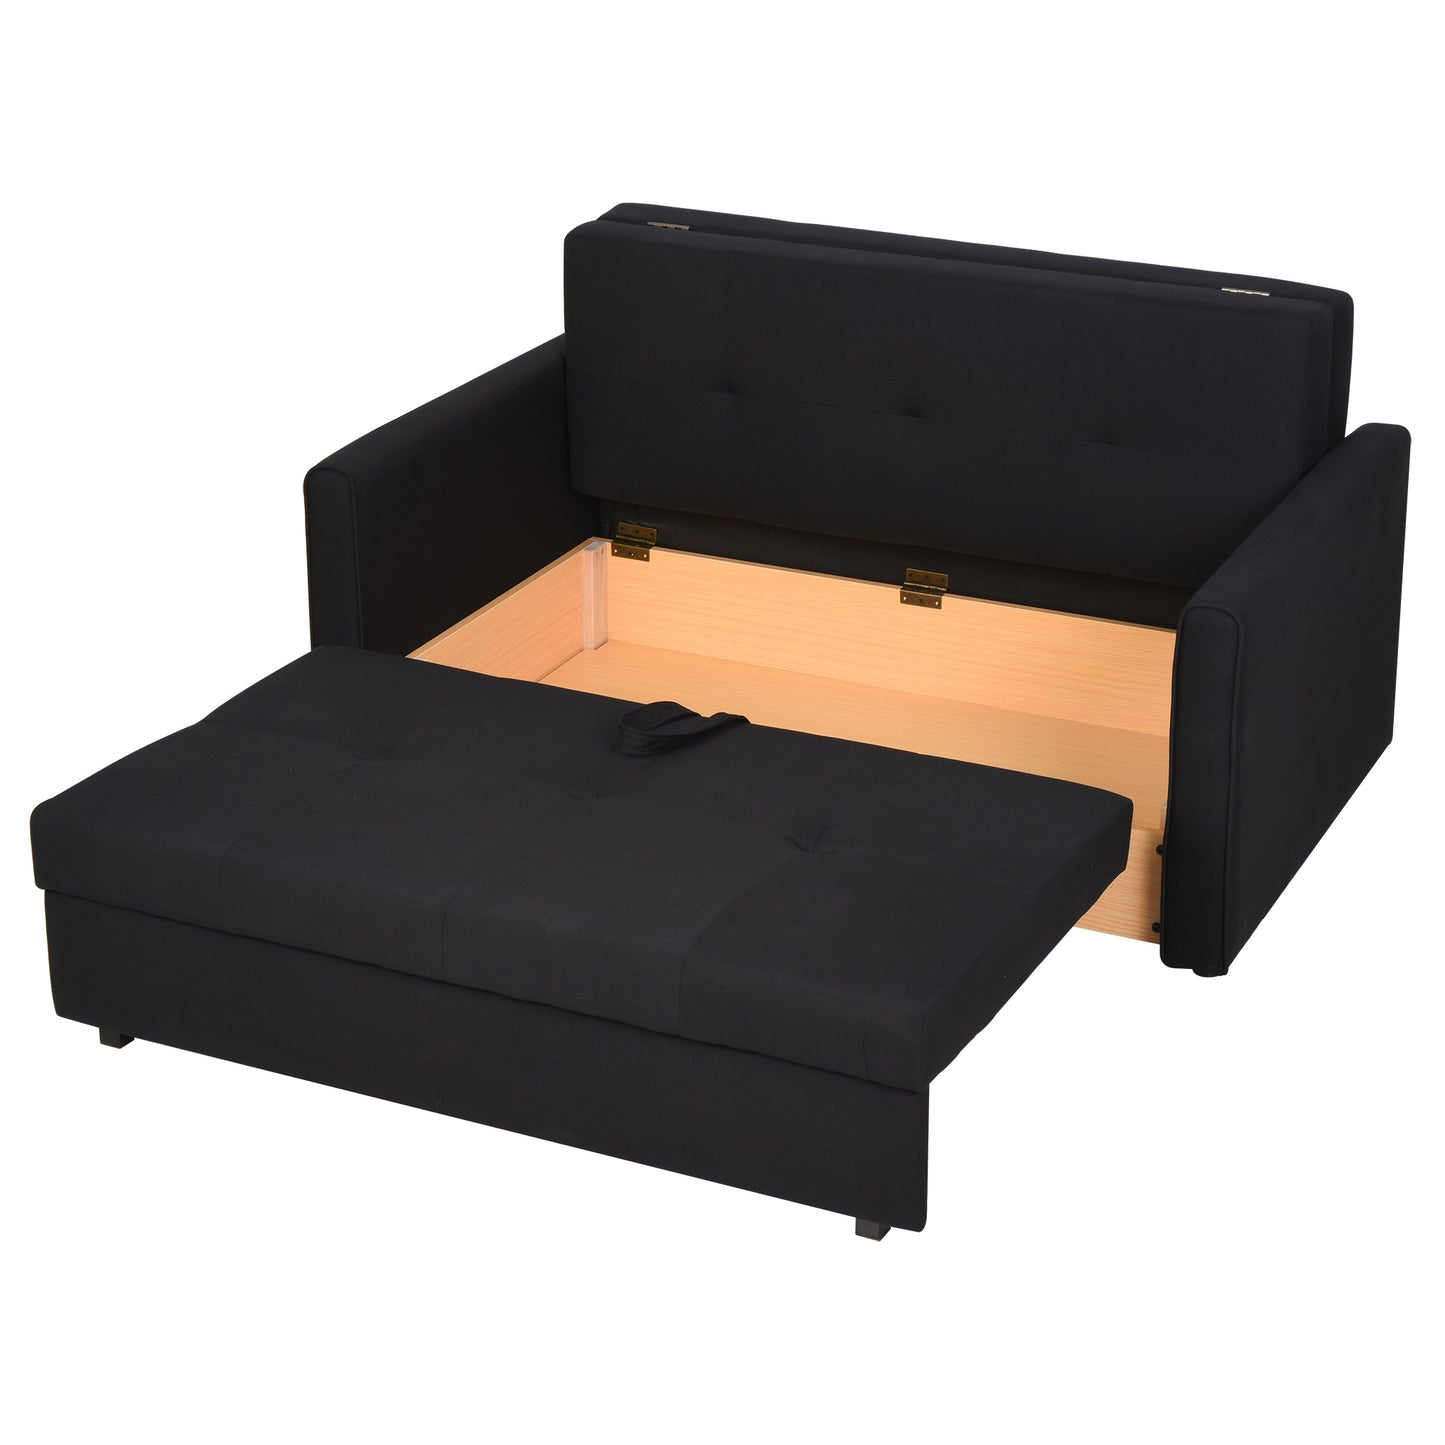 HOMCOM Polycotton 2-Seater Sofa Bed w/ Pillows Dark Grey